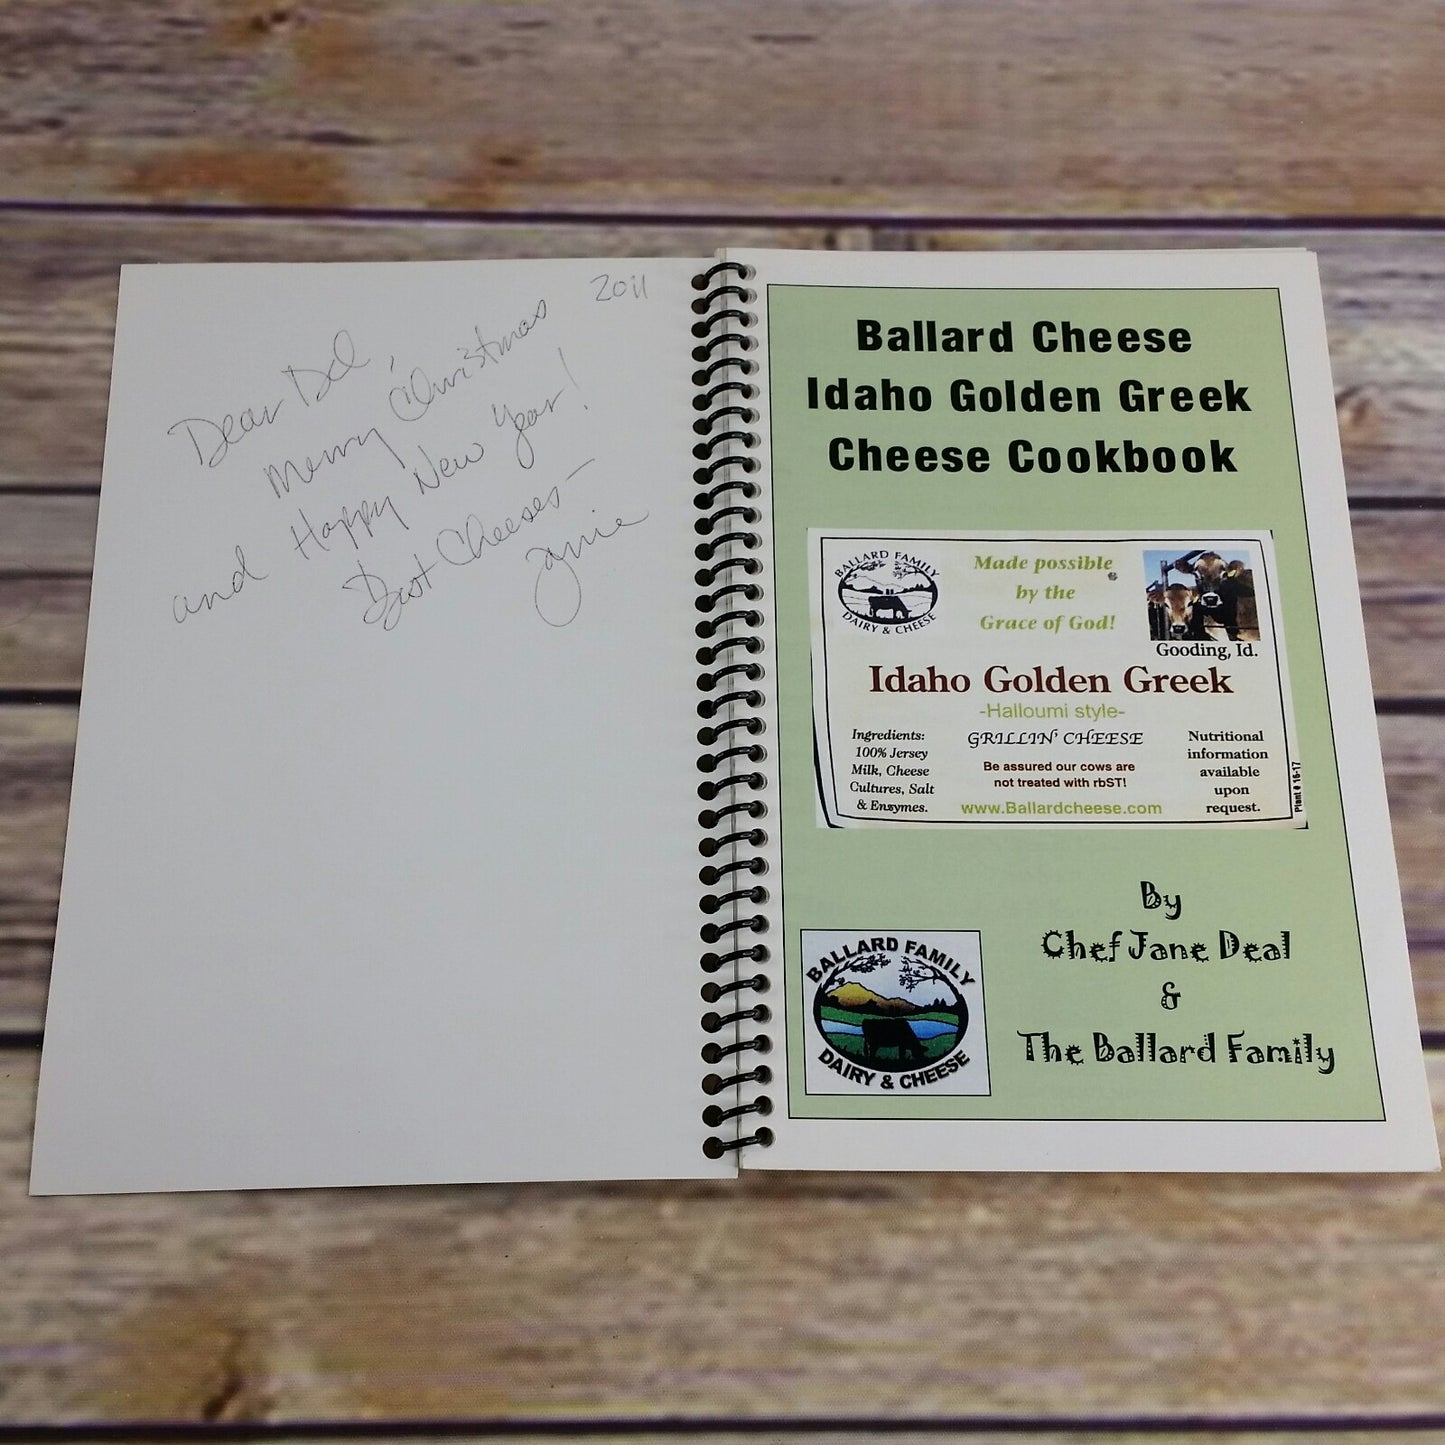 Idaho Cheese Cookbook The Answer to World Piece Ballard Cheese Chef Jane Deal - At Grandma's Table